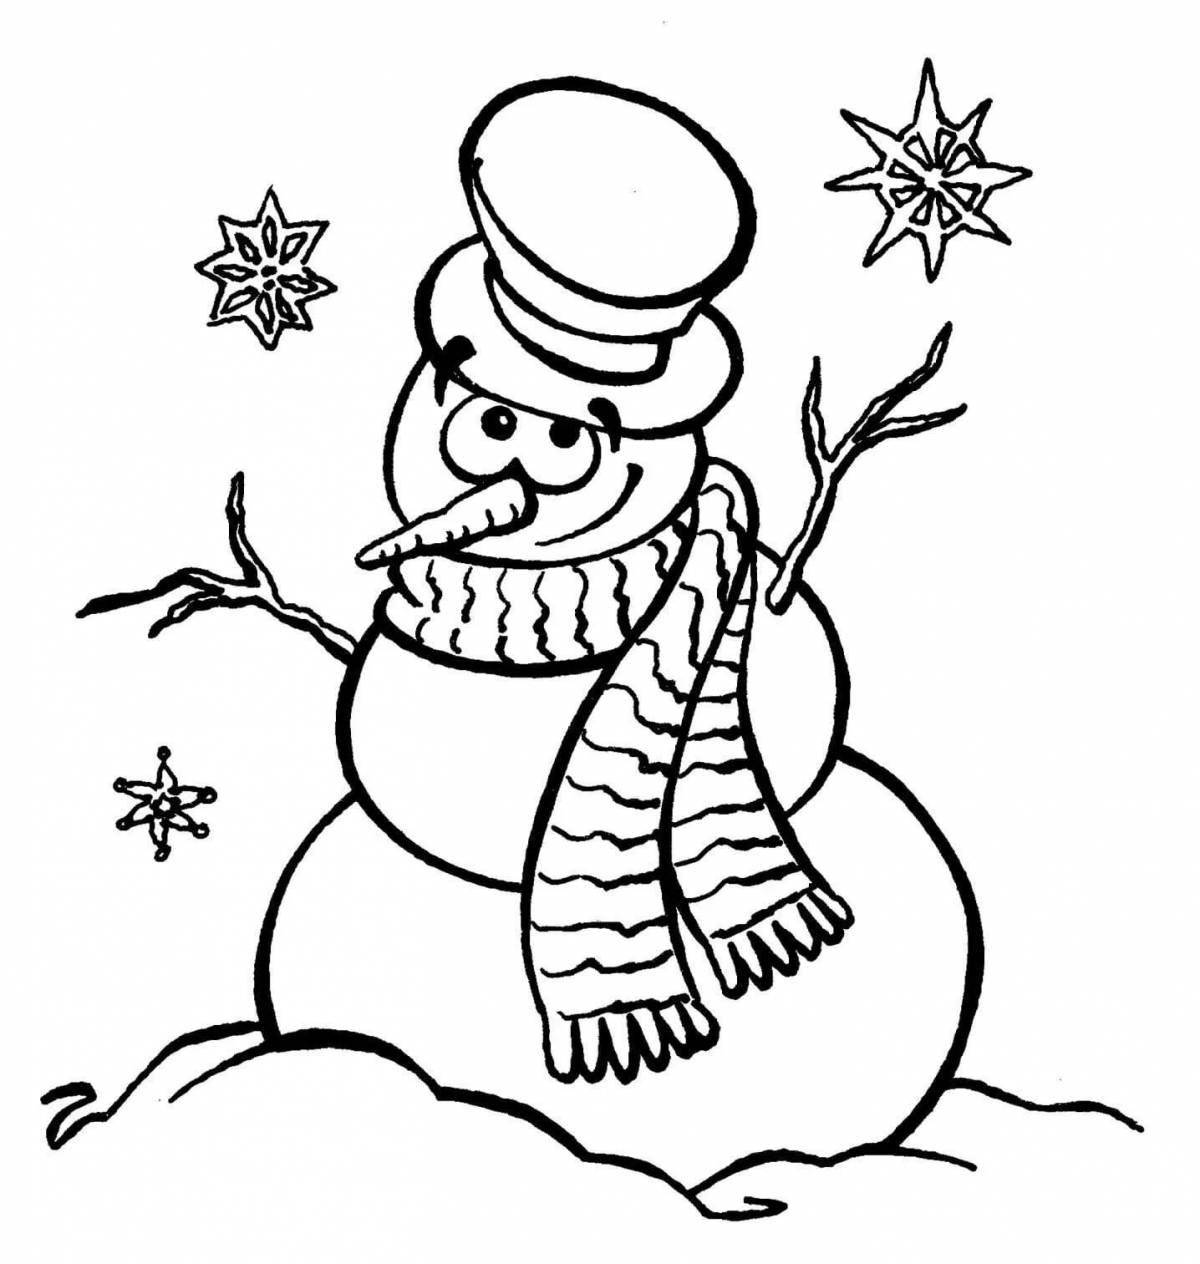 Adorable funny snowman coloring book